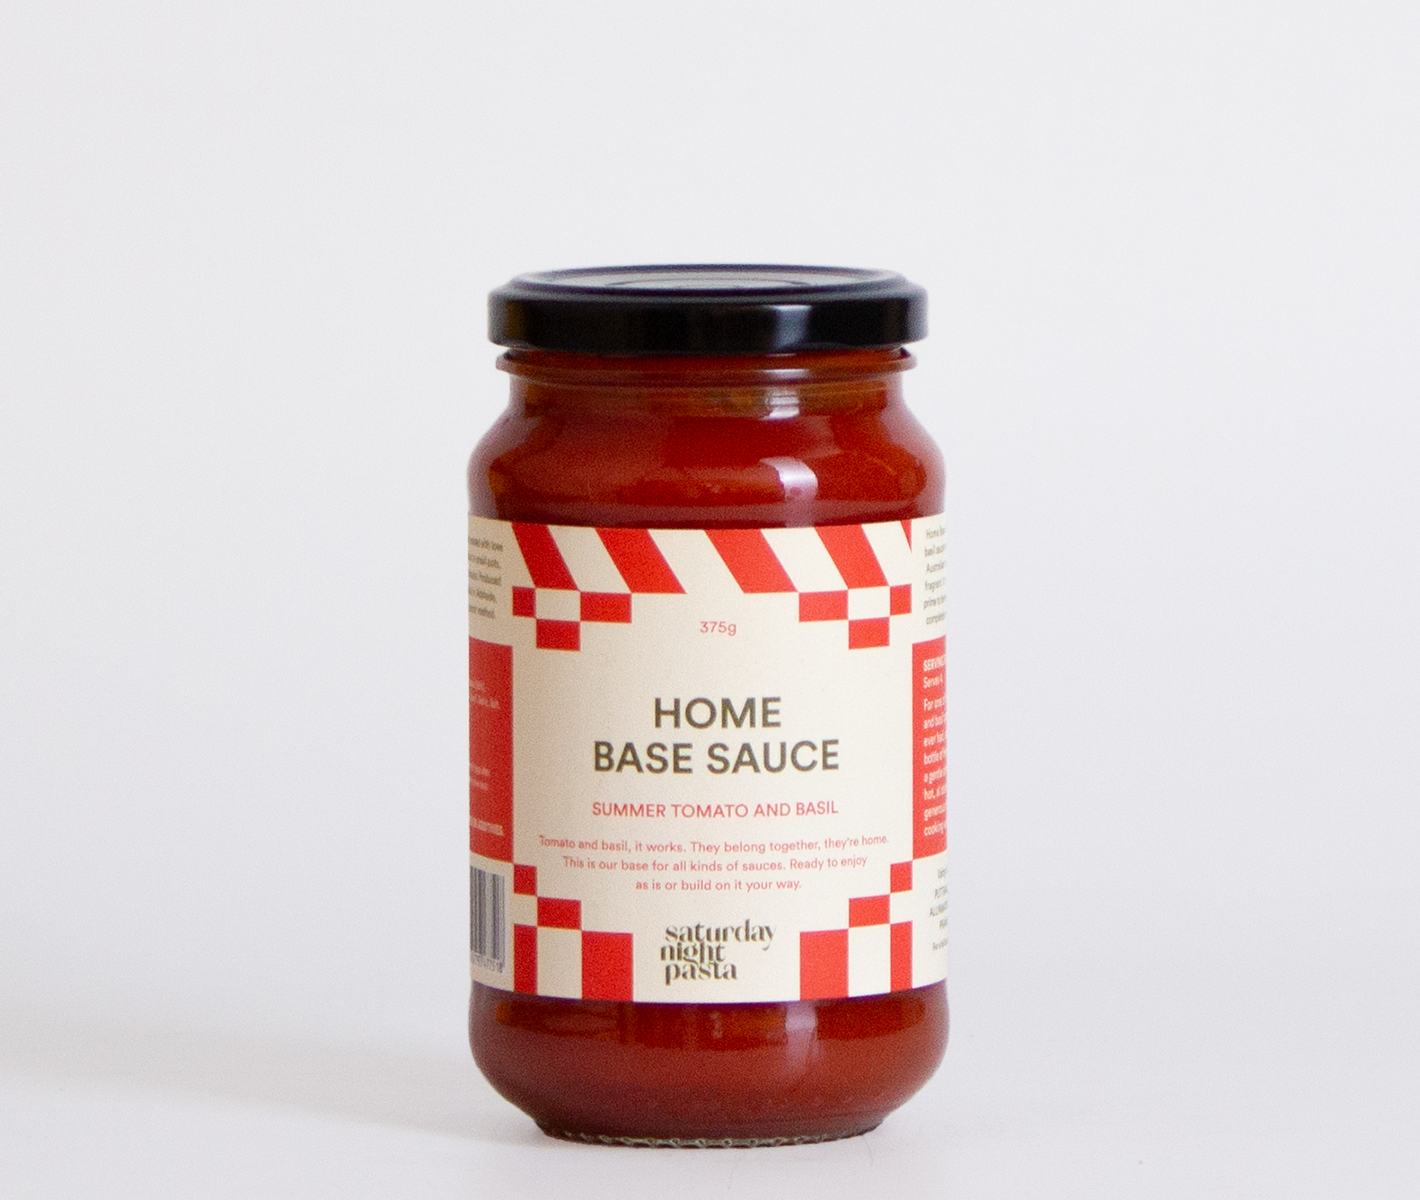 Home Base Sauce (375g)